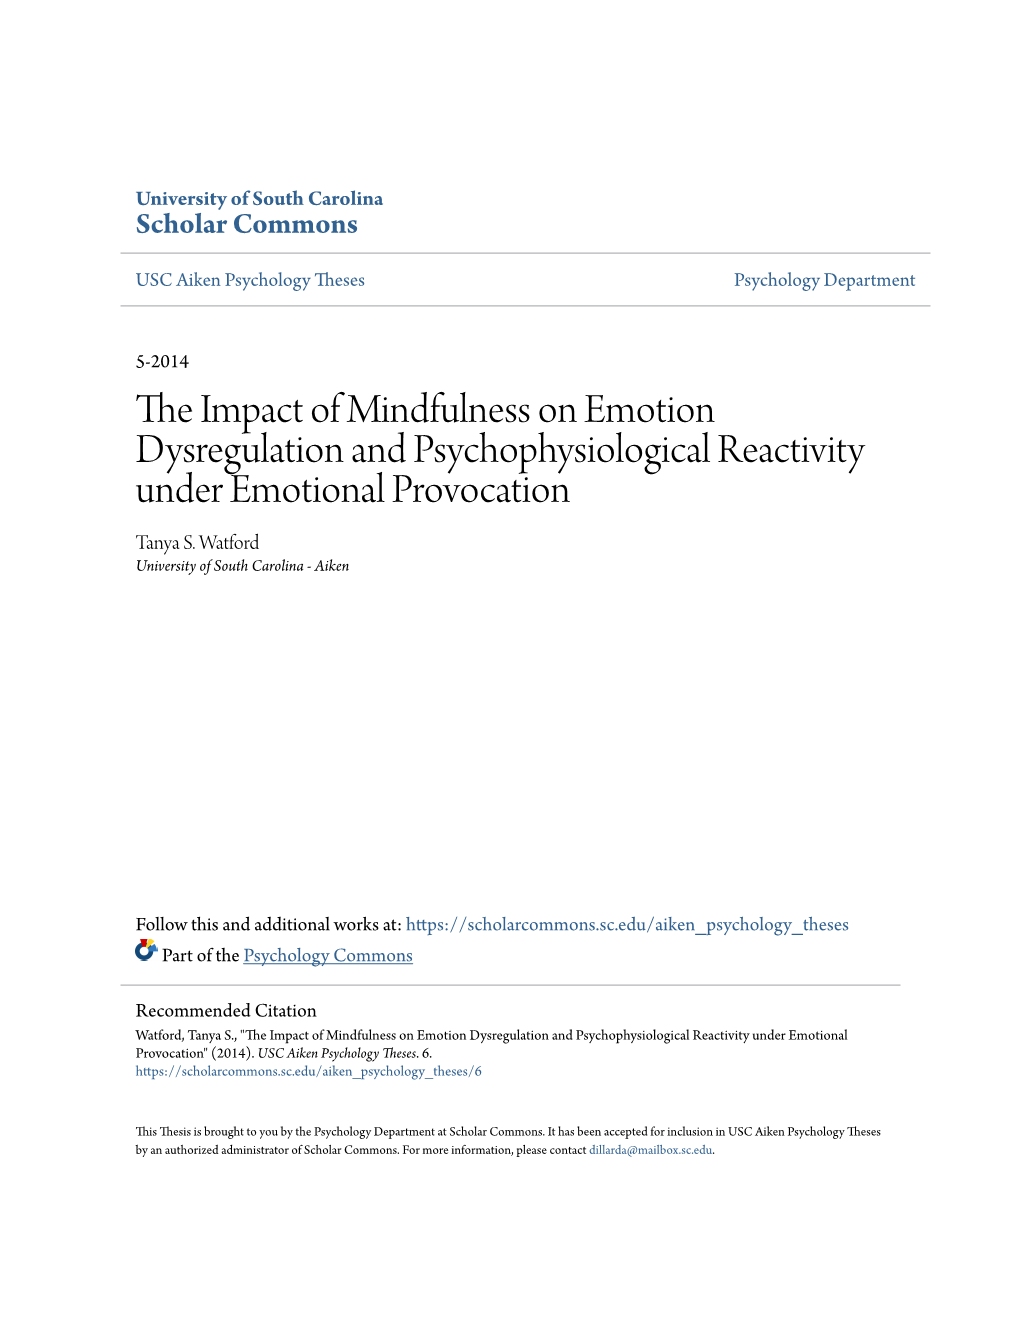 The Impact of Mindfulness on Emotion Dysregulation and Psychophysiological Reactivity Under